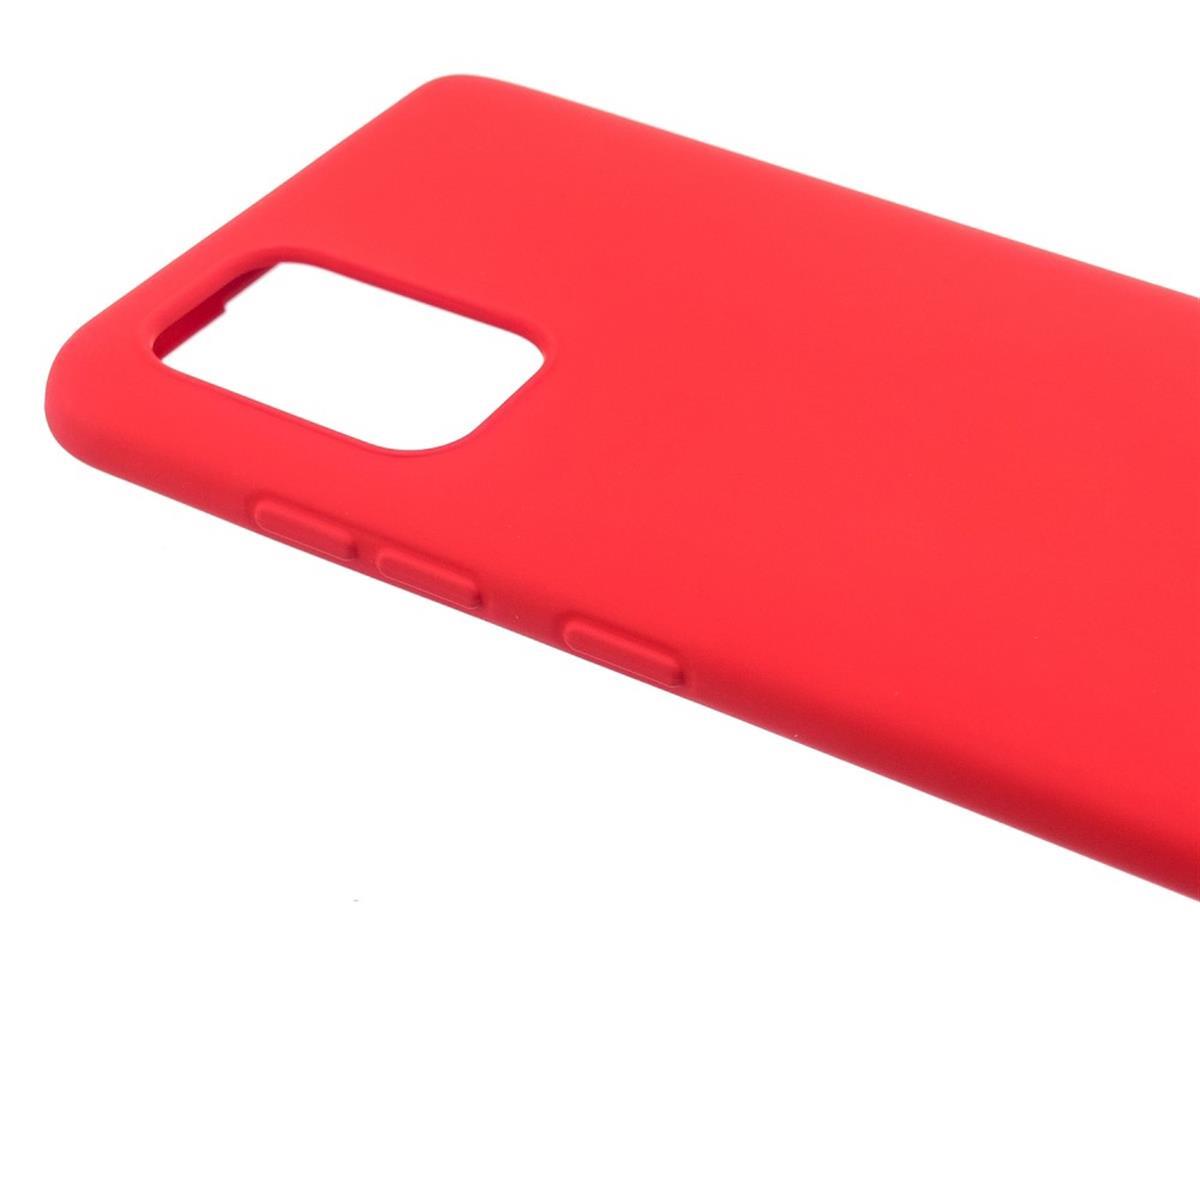 Hülle für Samsung Galaxy A52/A52 5G/A52s 5G Handy Silikon Case Cover Matt Rot